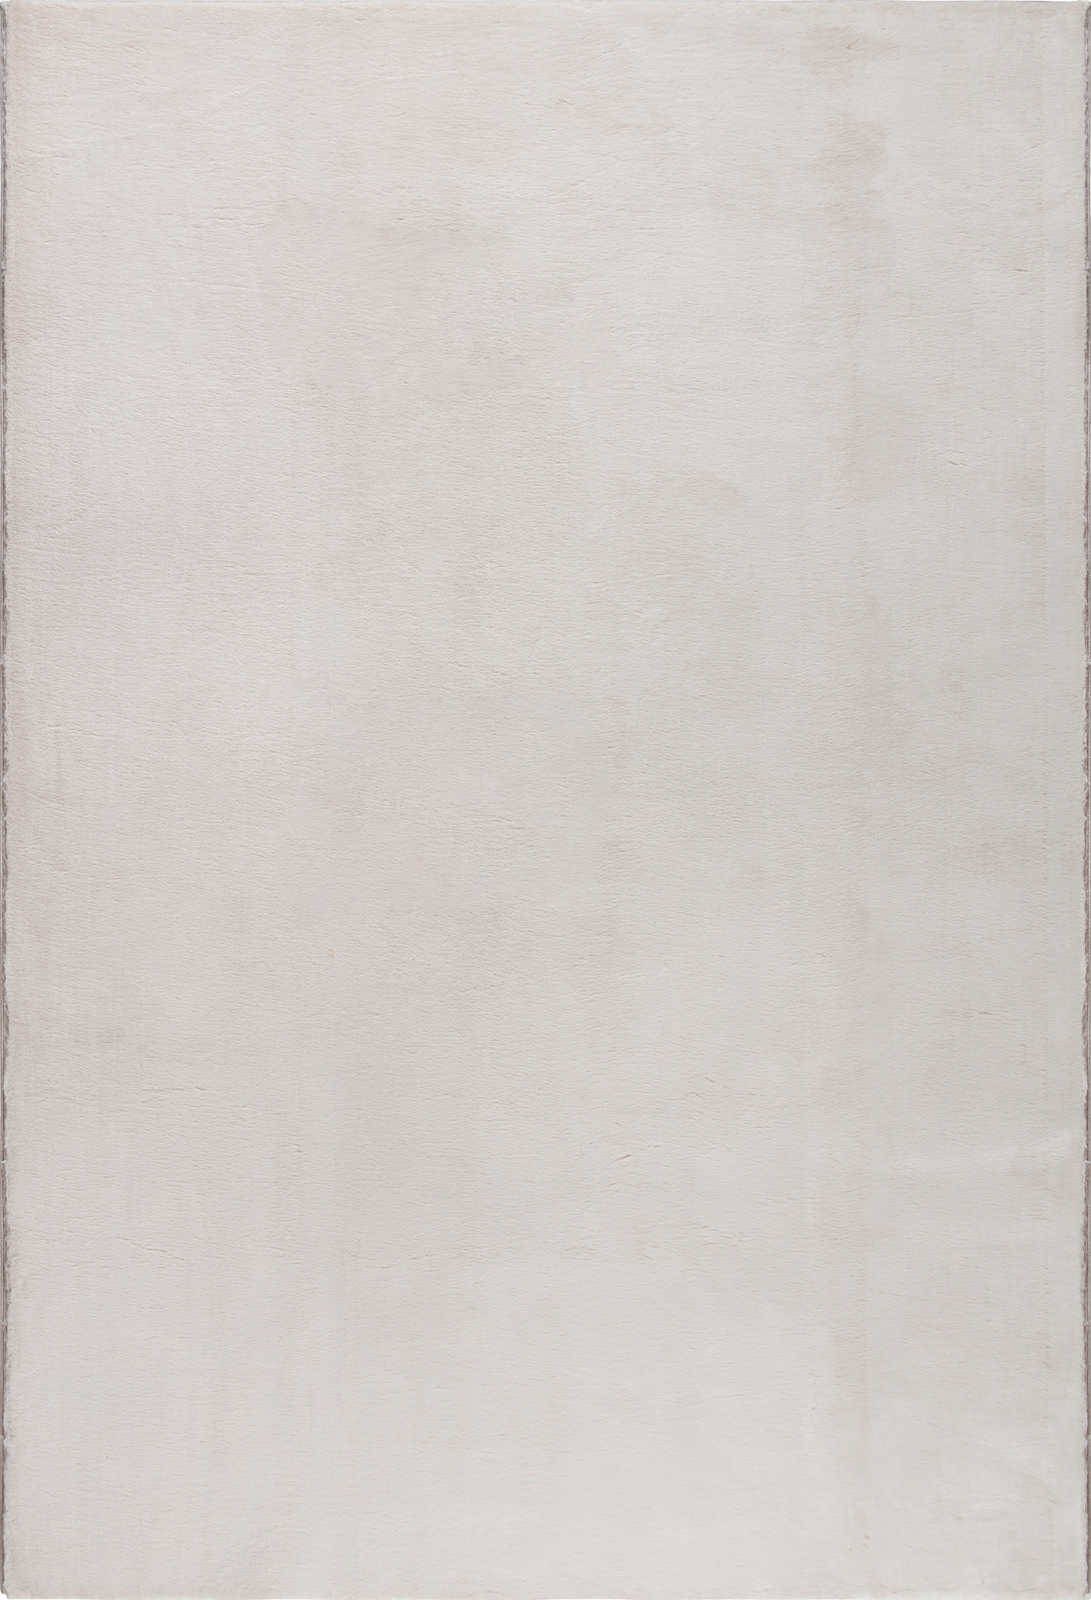             Knuffelzacht hoogpolig tapijt in lichtbeige - 230 x 160 cm
        